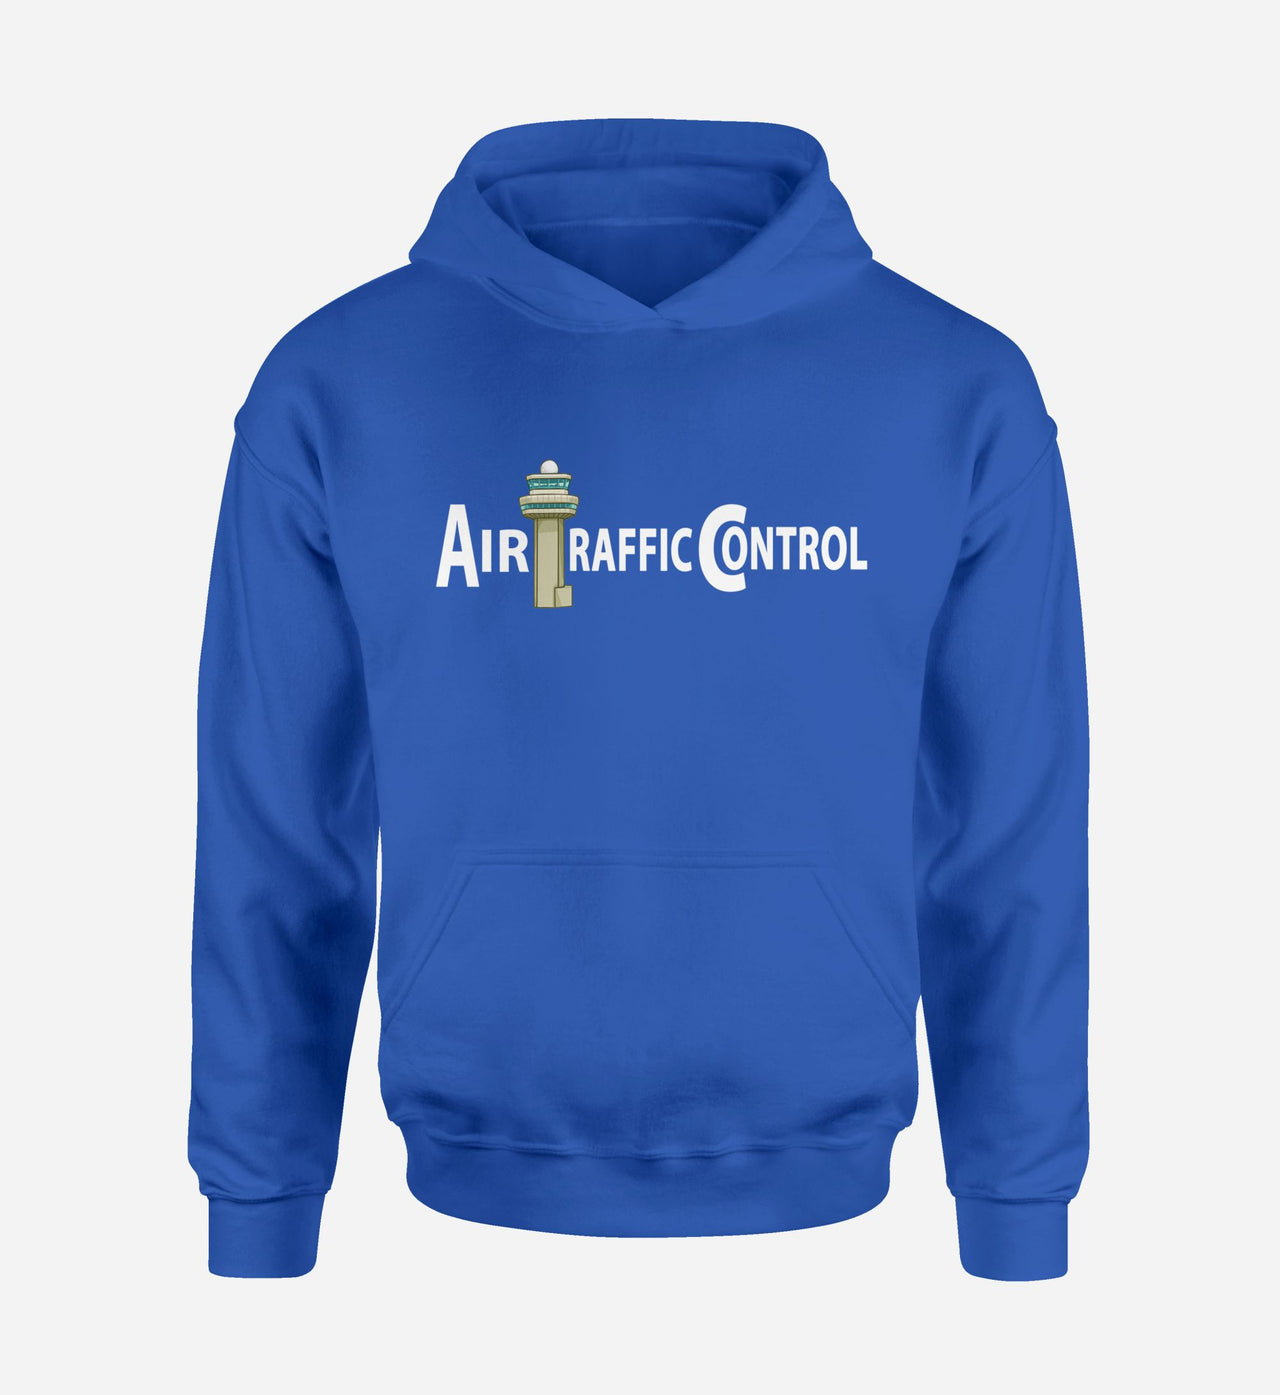 Air Traffic Control Designed Hoodies